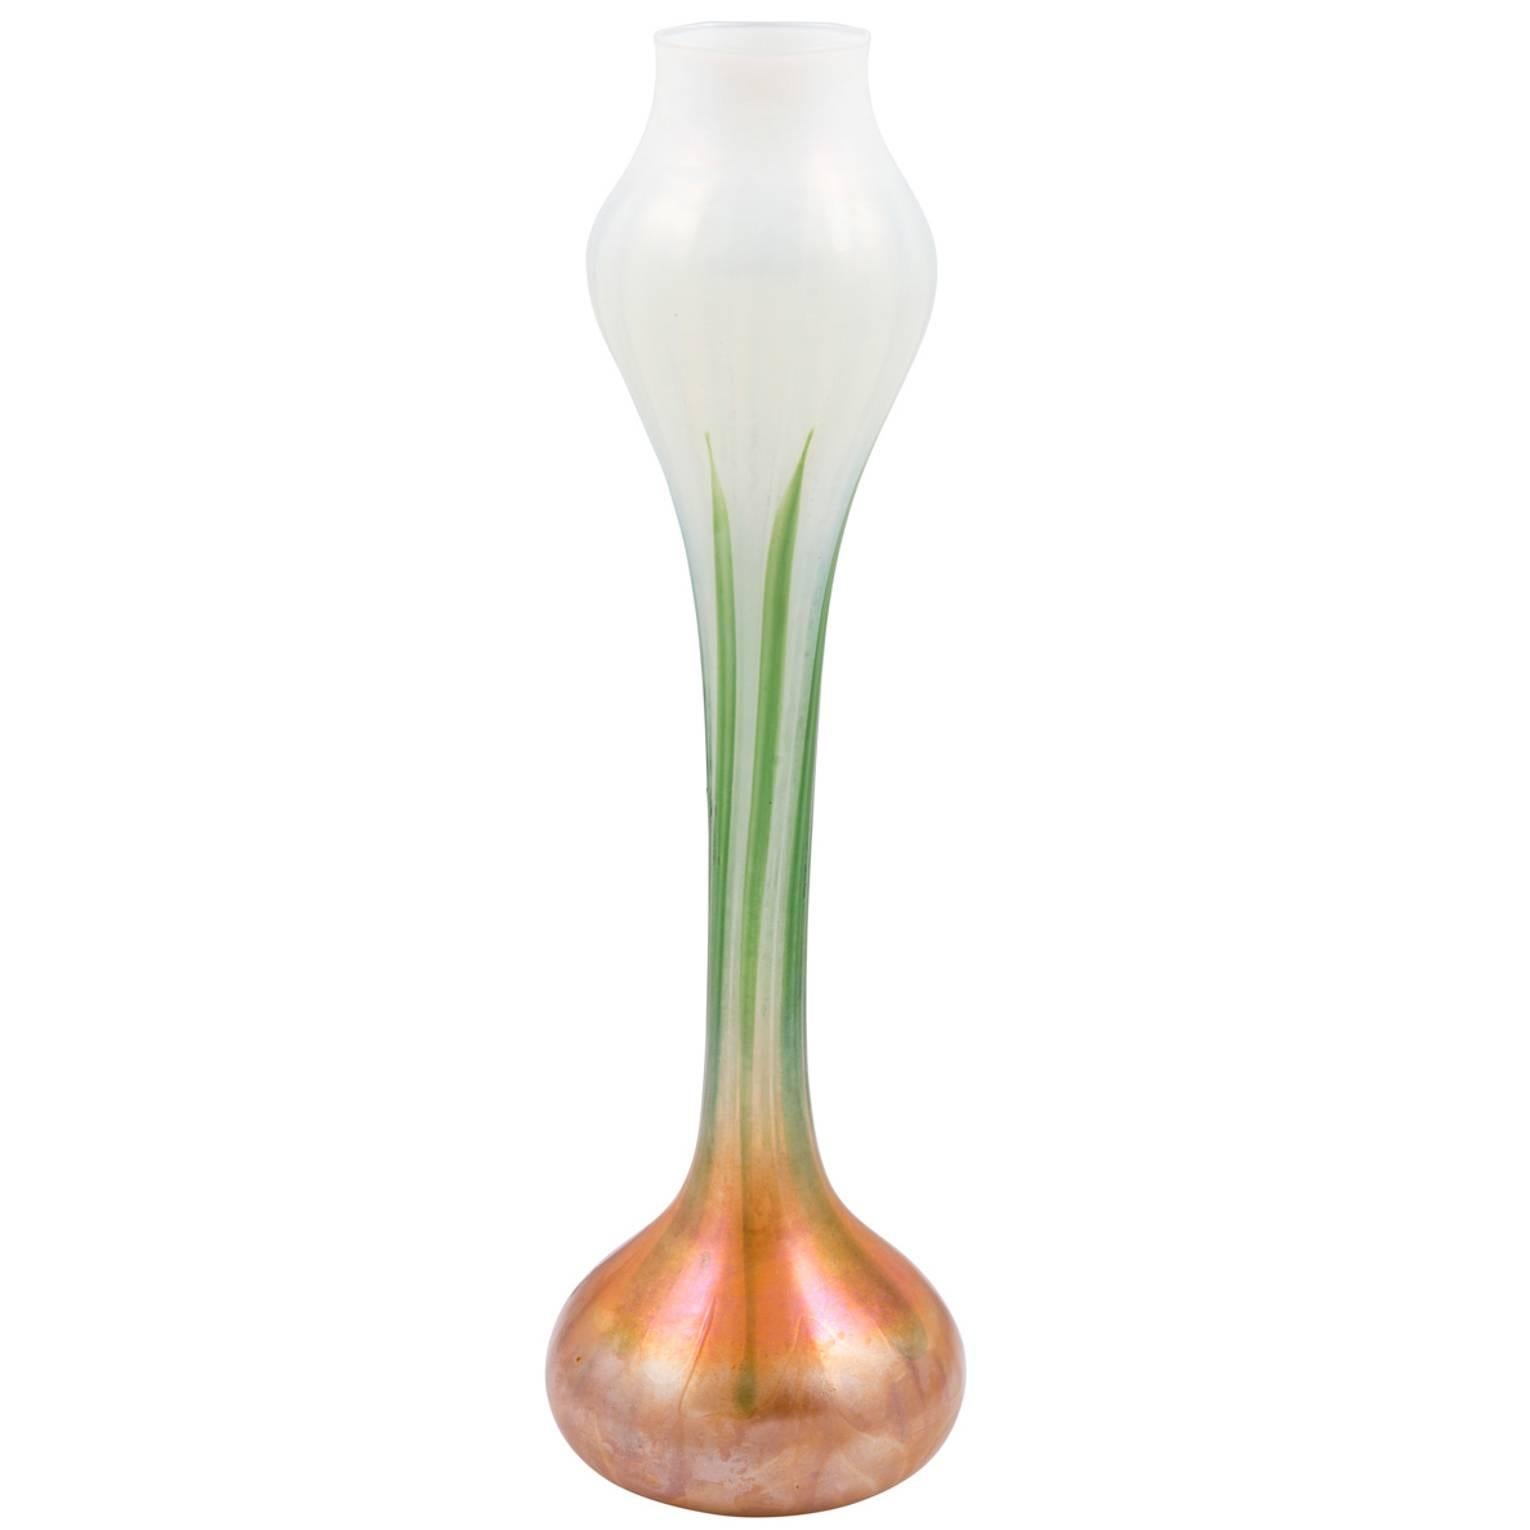 Rare Favrile glass onion form vase Louis Comfort Tiffany ca. 1899